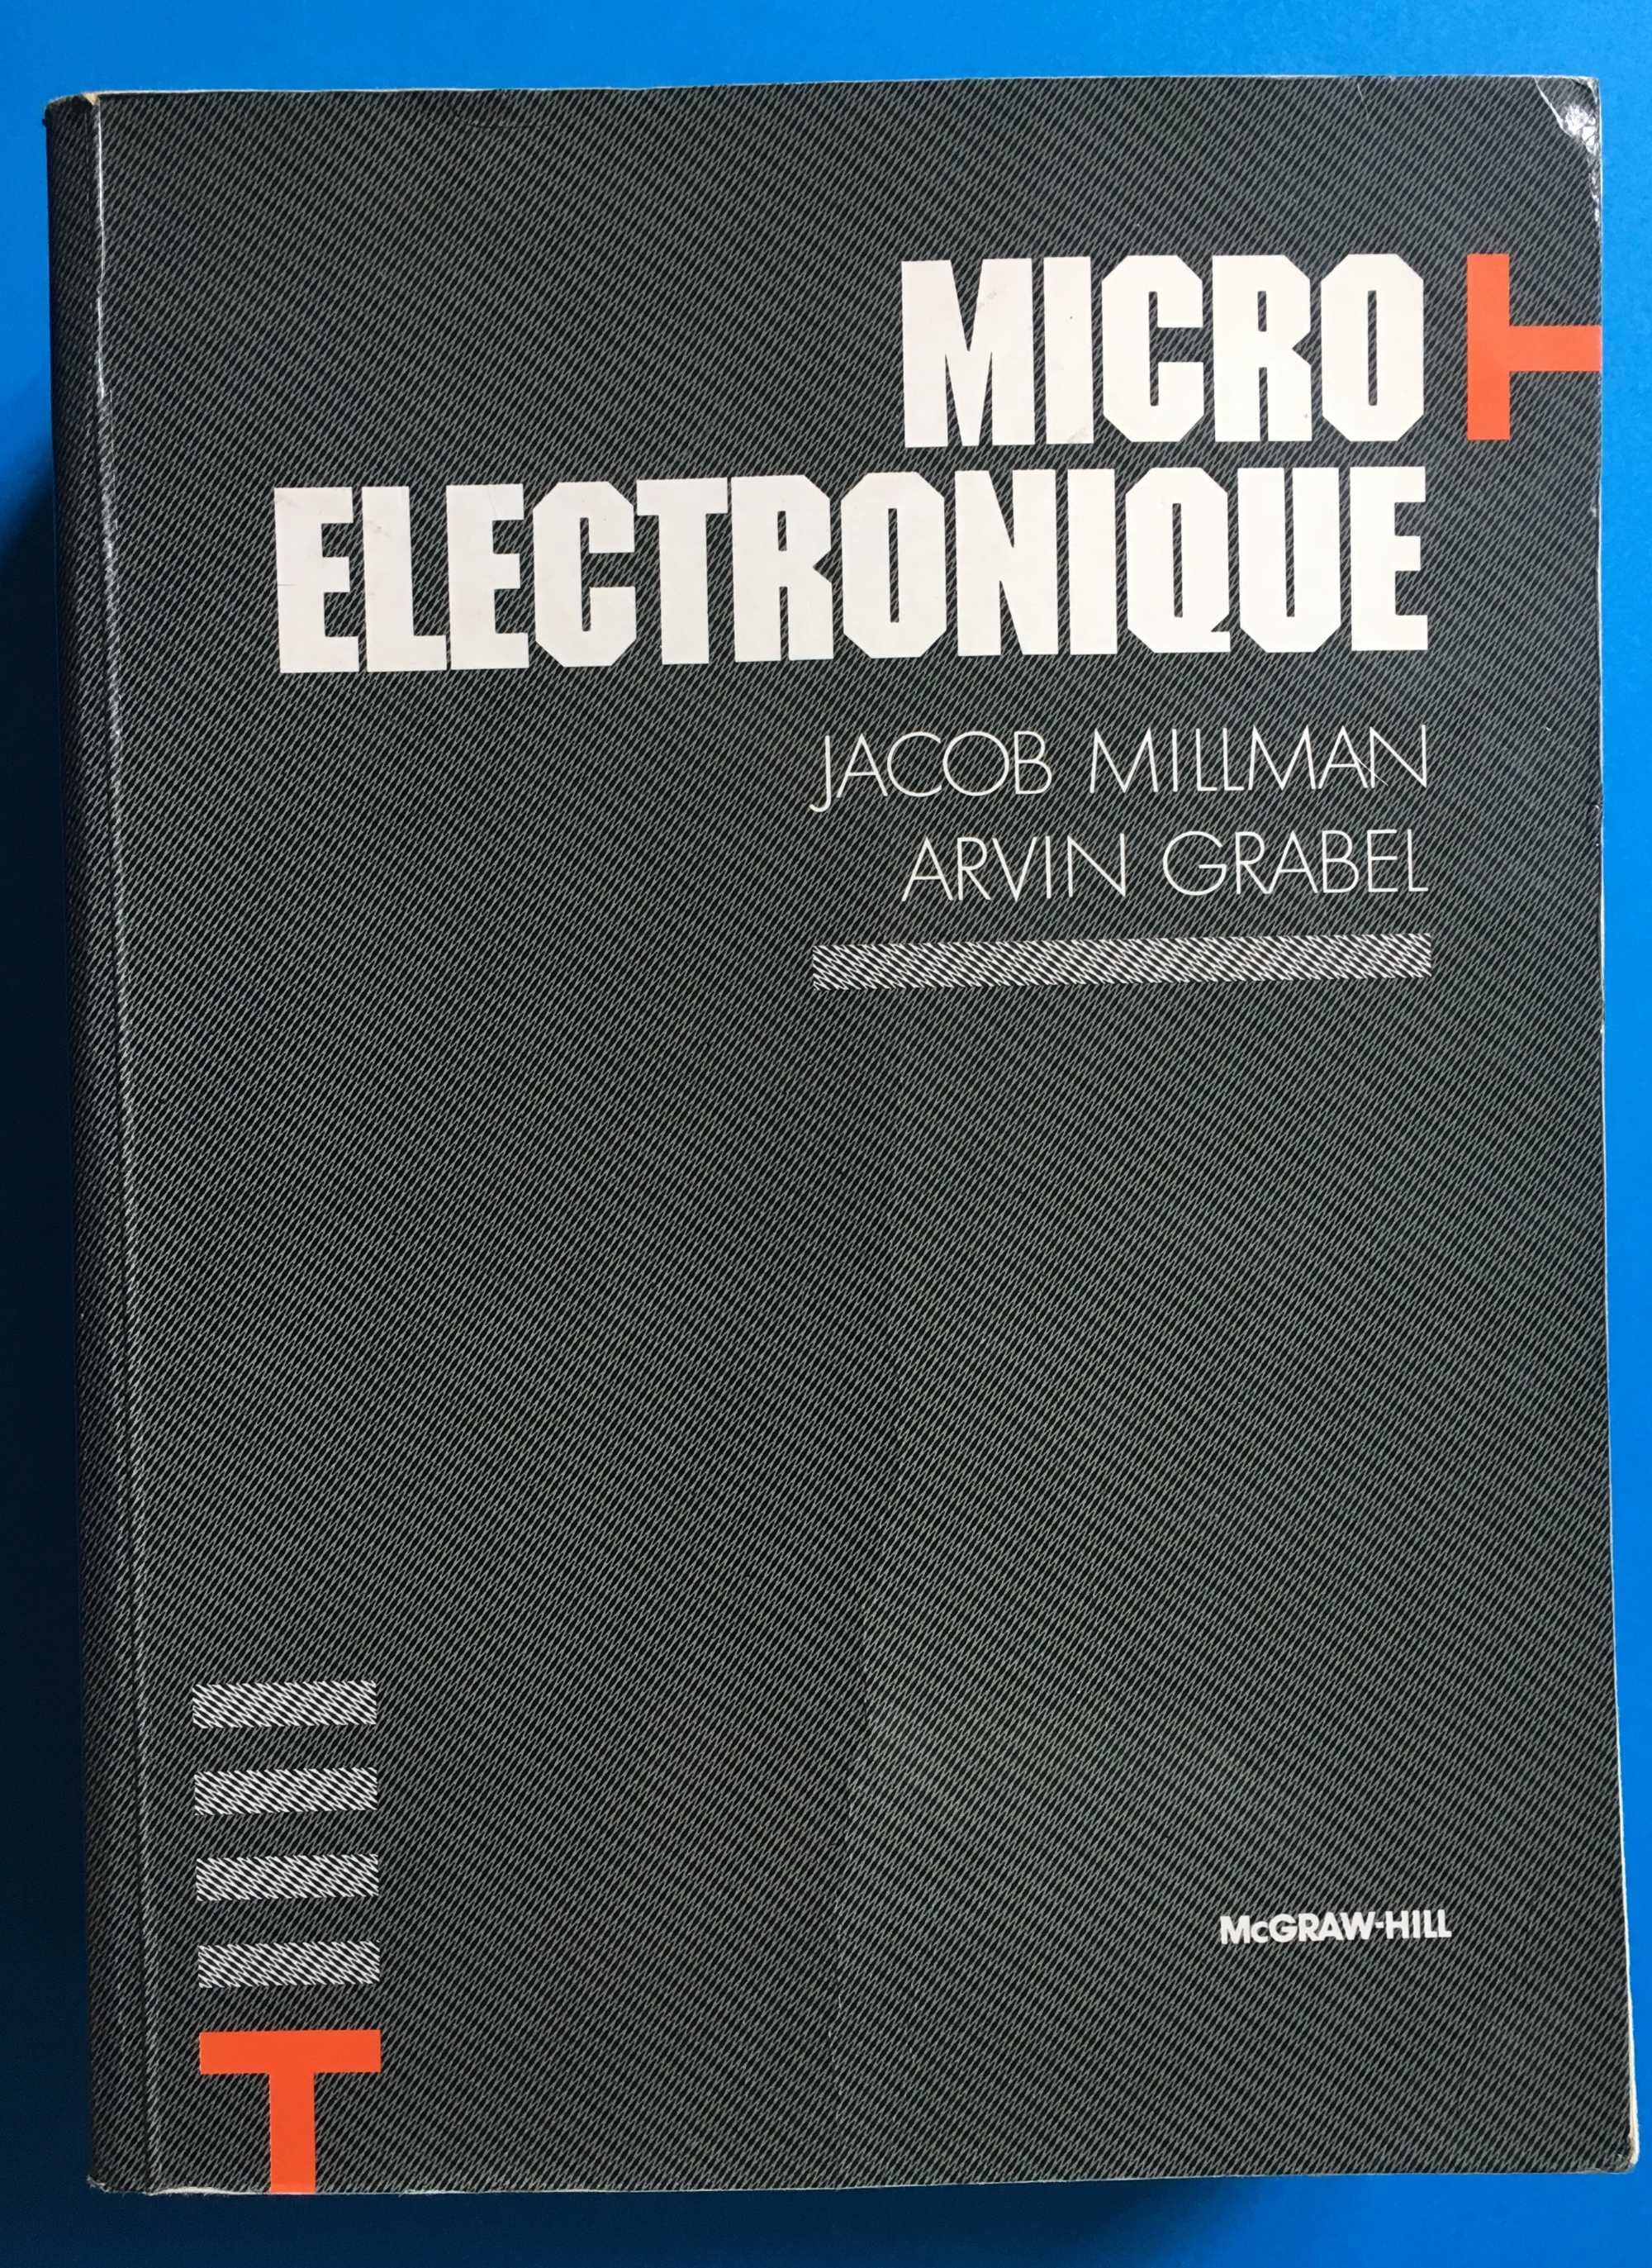 Livro "Microelectronique"